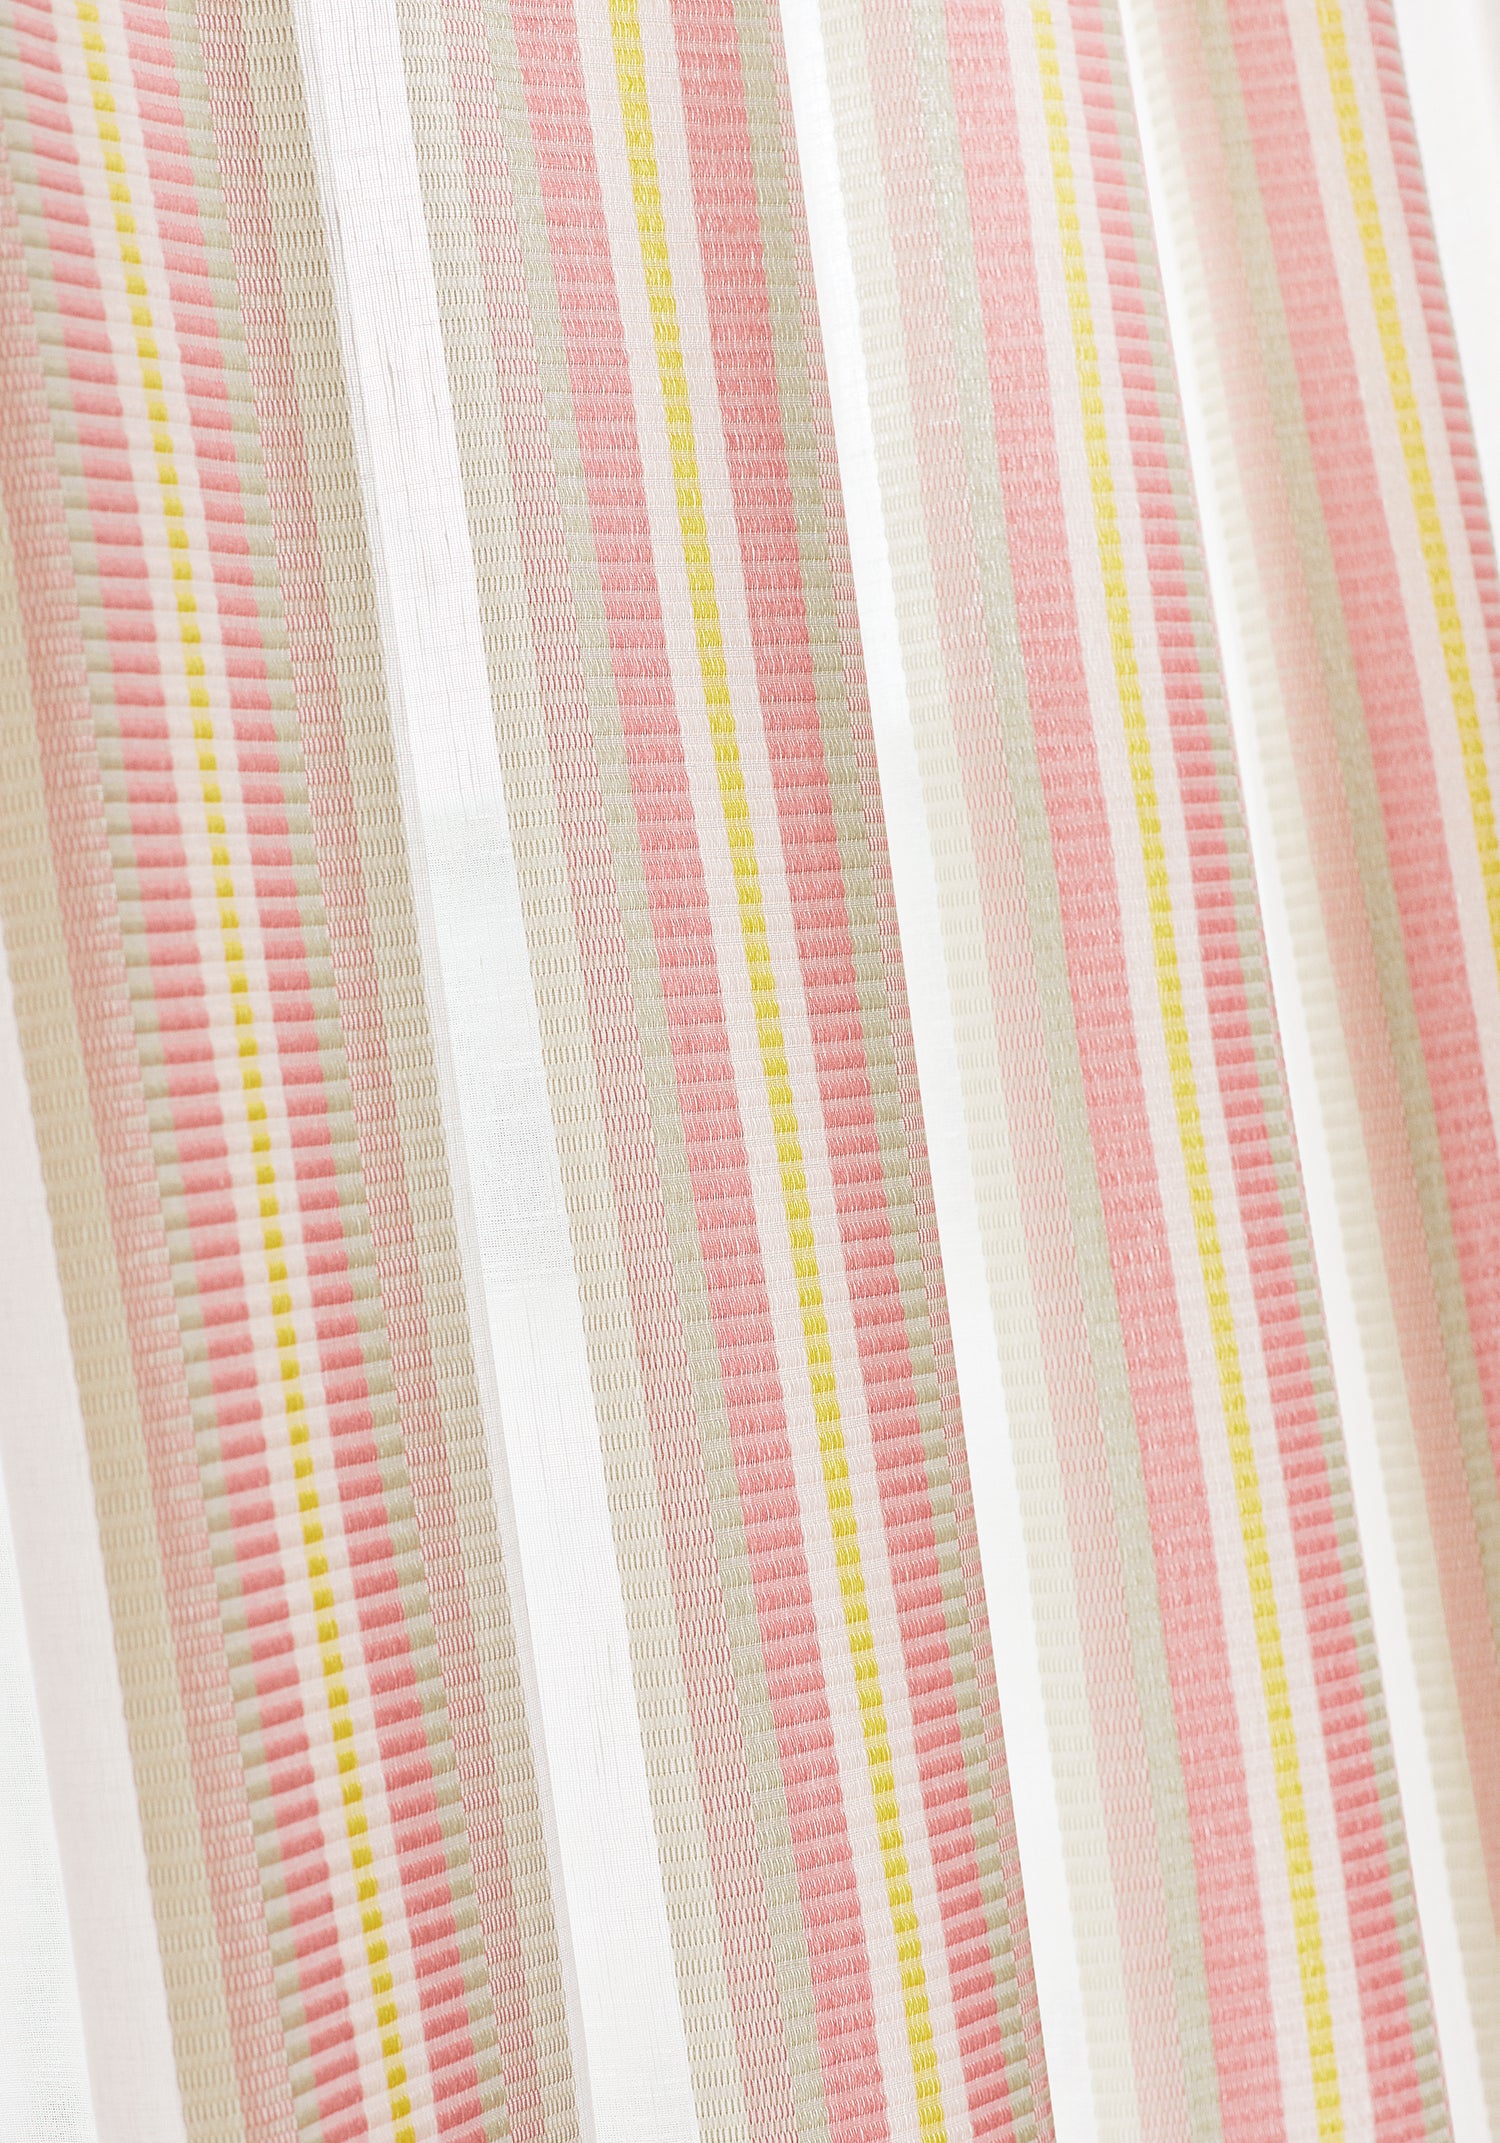 Detail of Thibaut Stanley Stripe woven fabric in Pink Lemonade pattern FWW7160